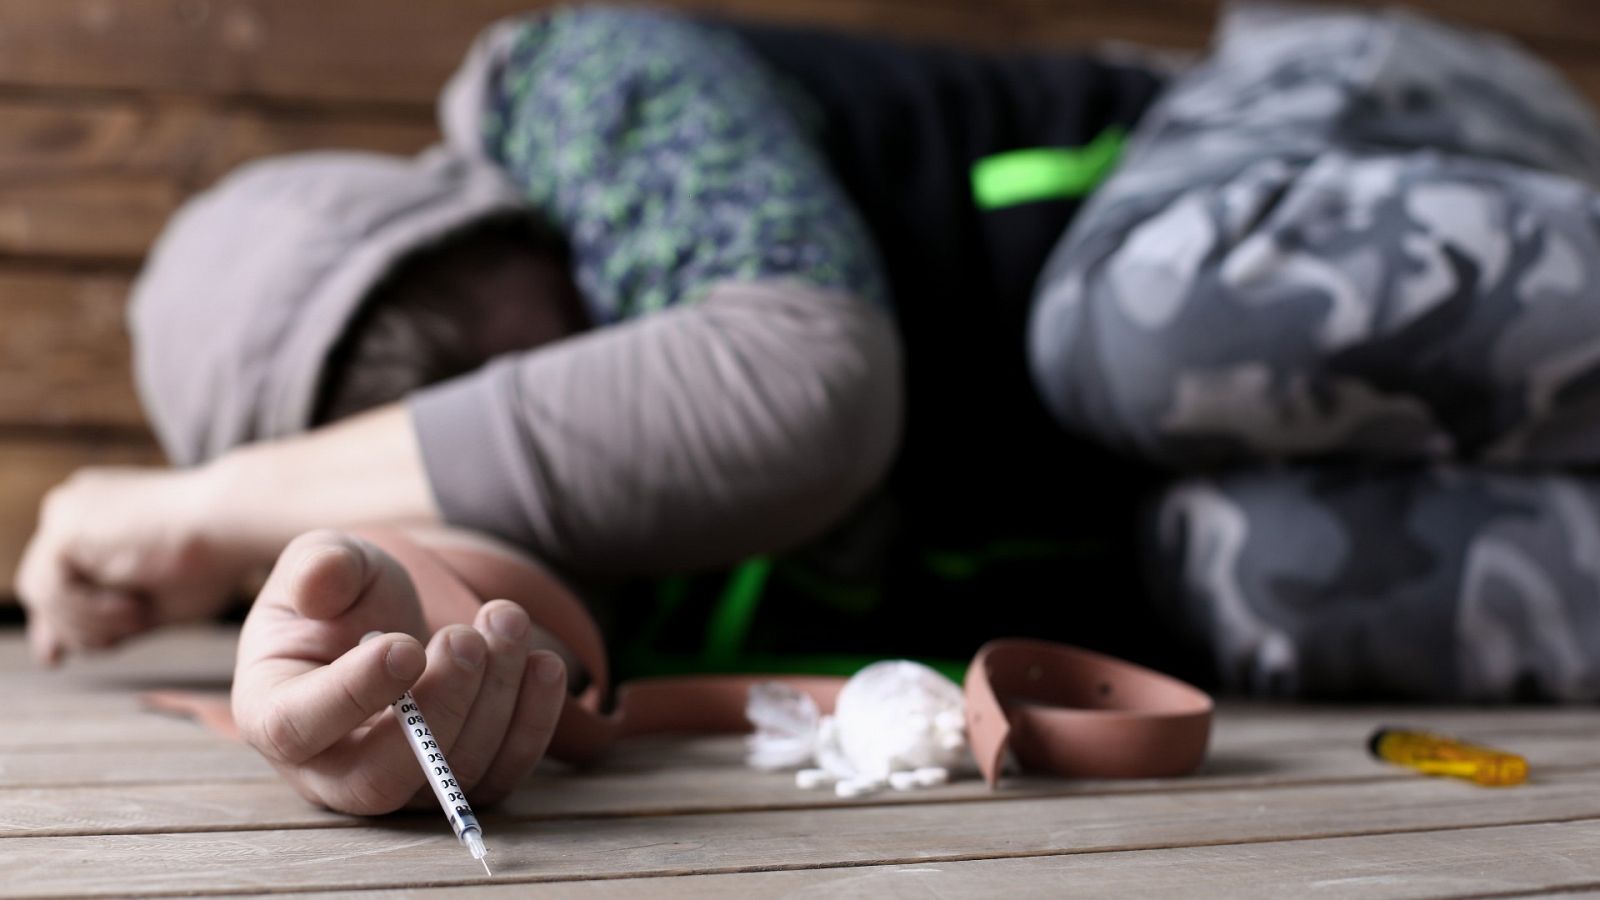 Emergencia en San Francisco por alta tasa muertes por sobredosis